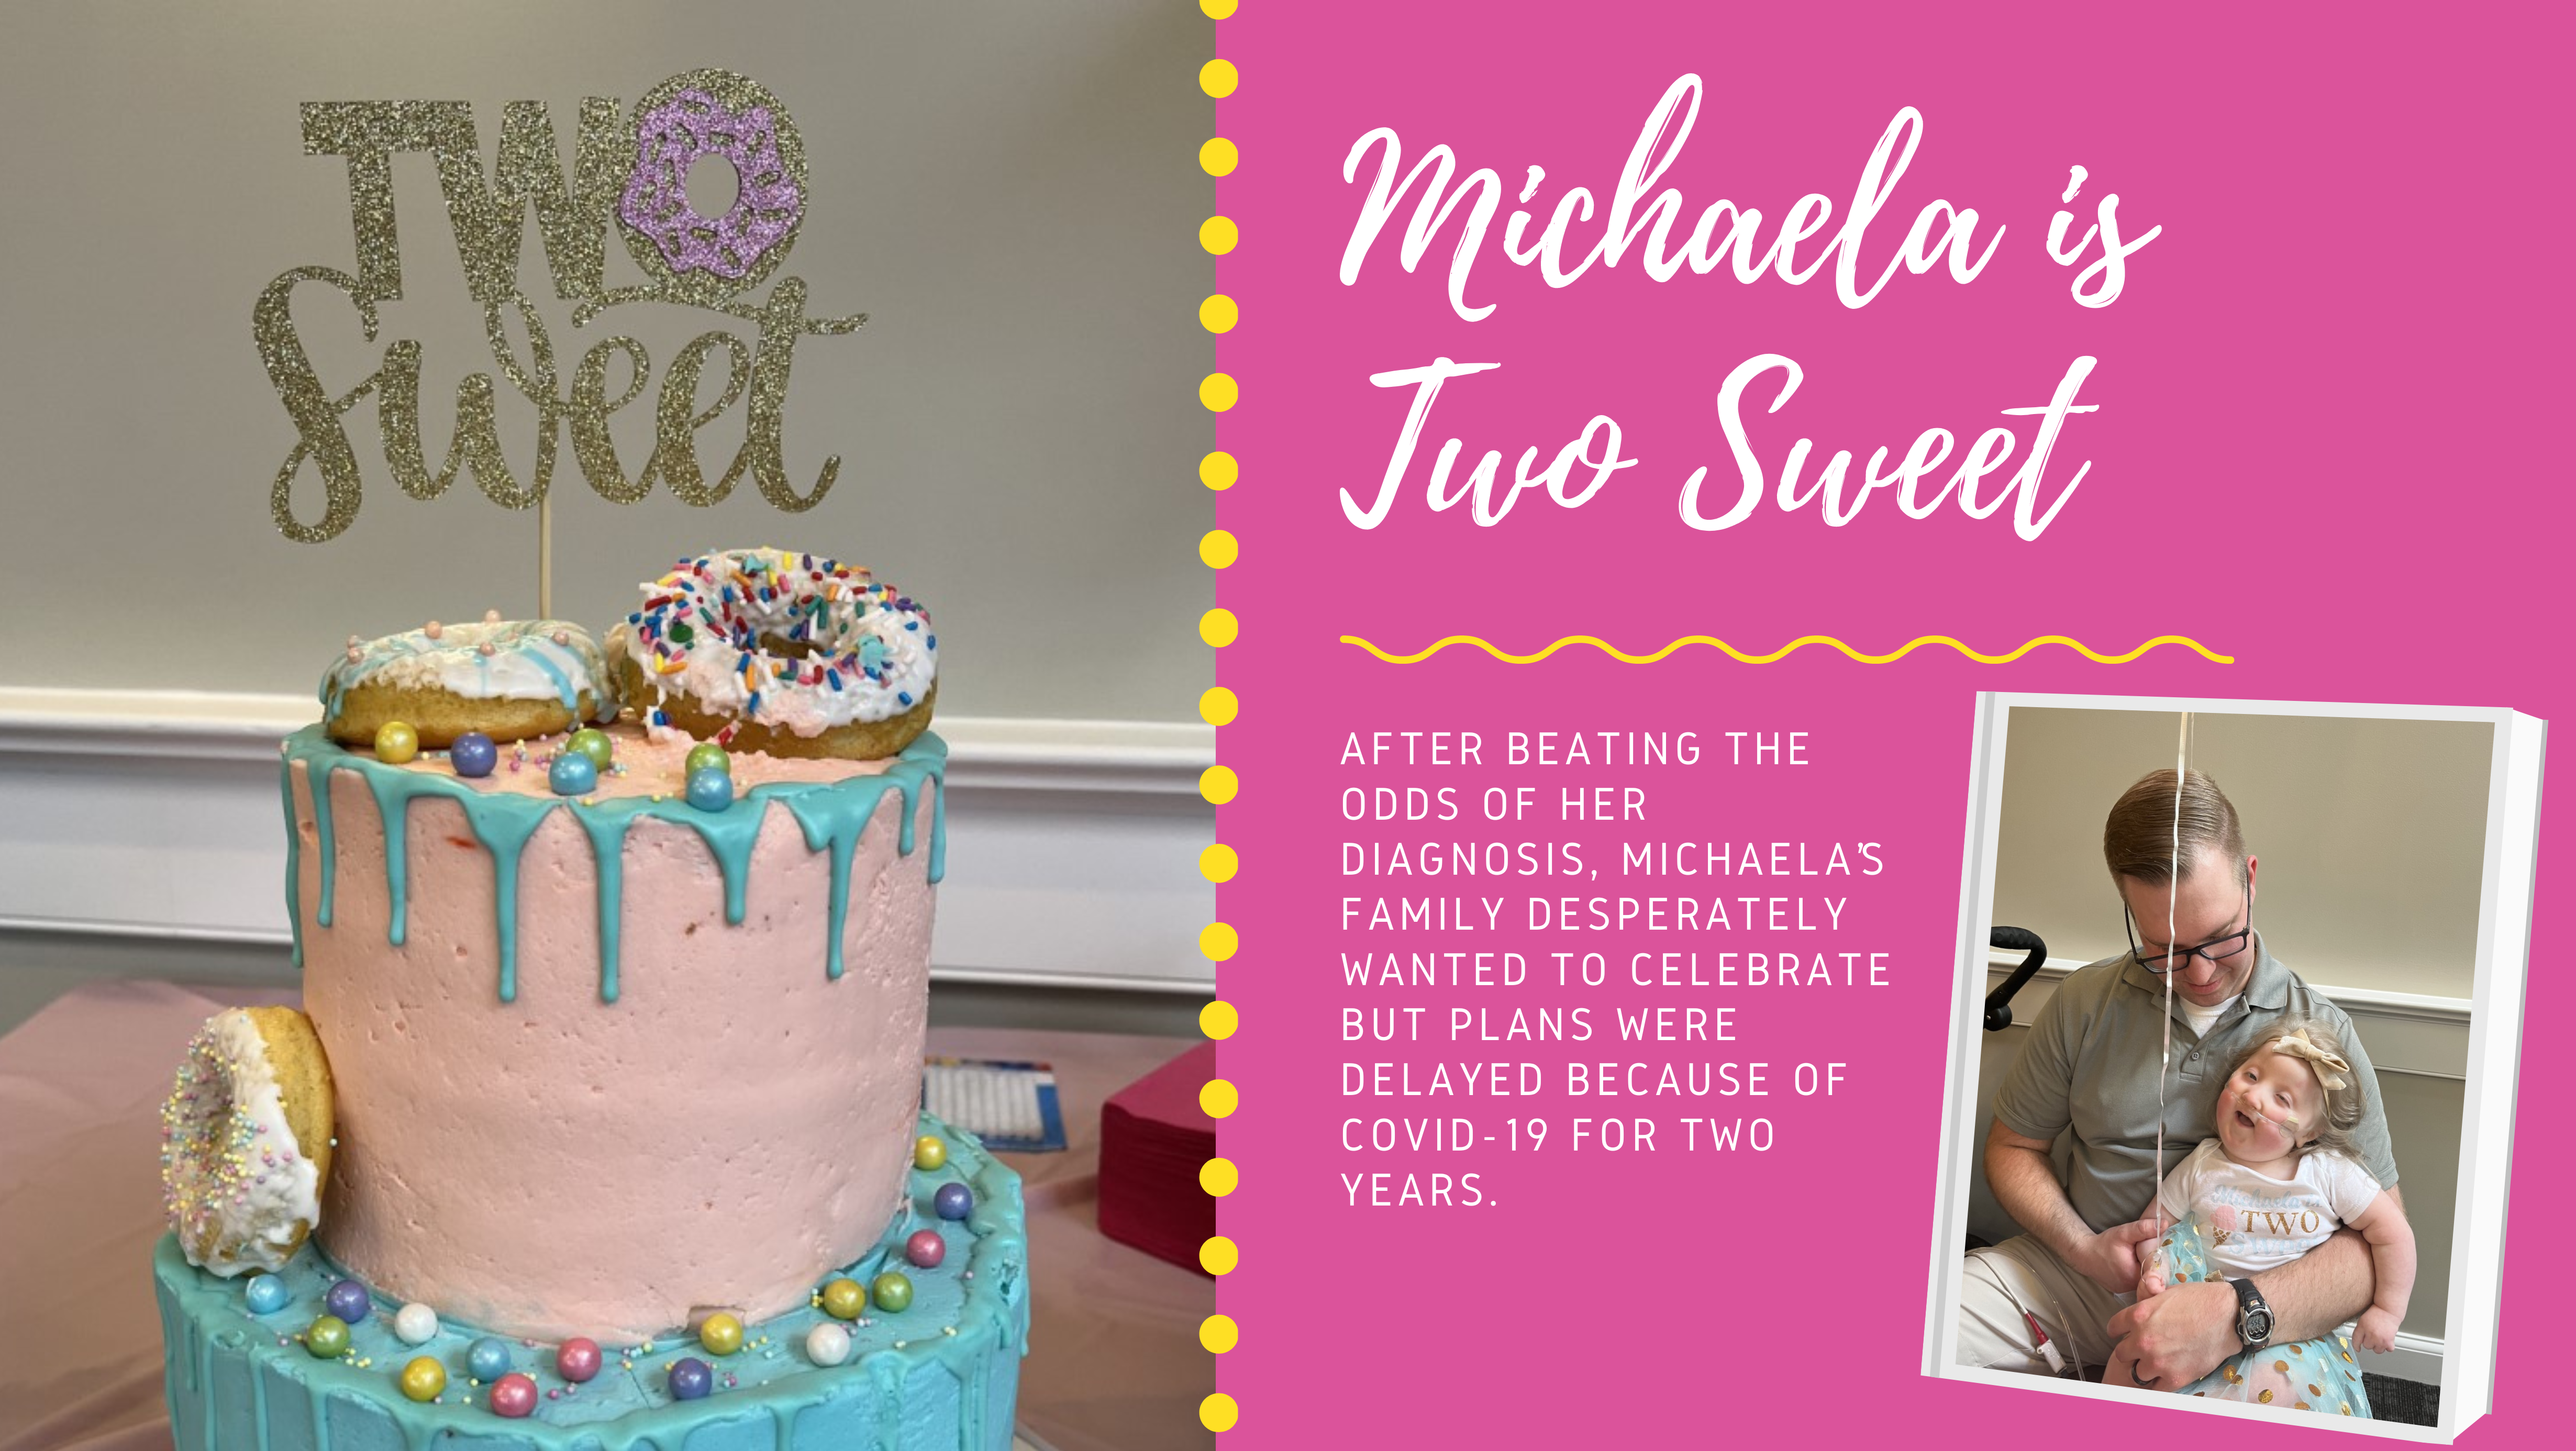 Michaela is Two Sweet card